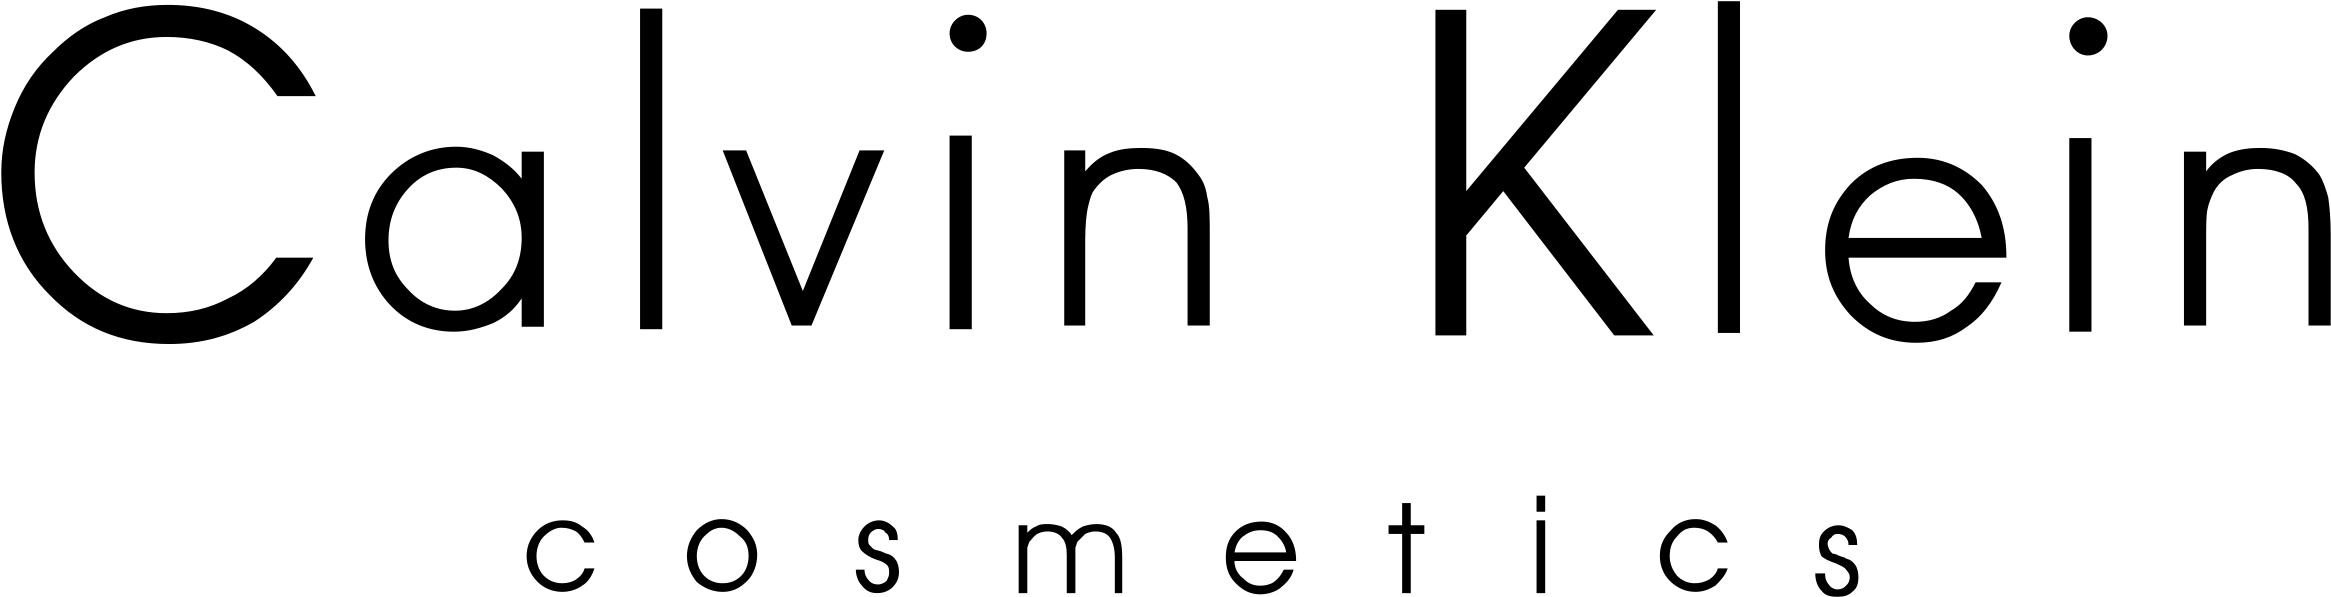 Imagem transparente do logotipo de Calvin Klein